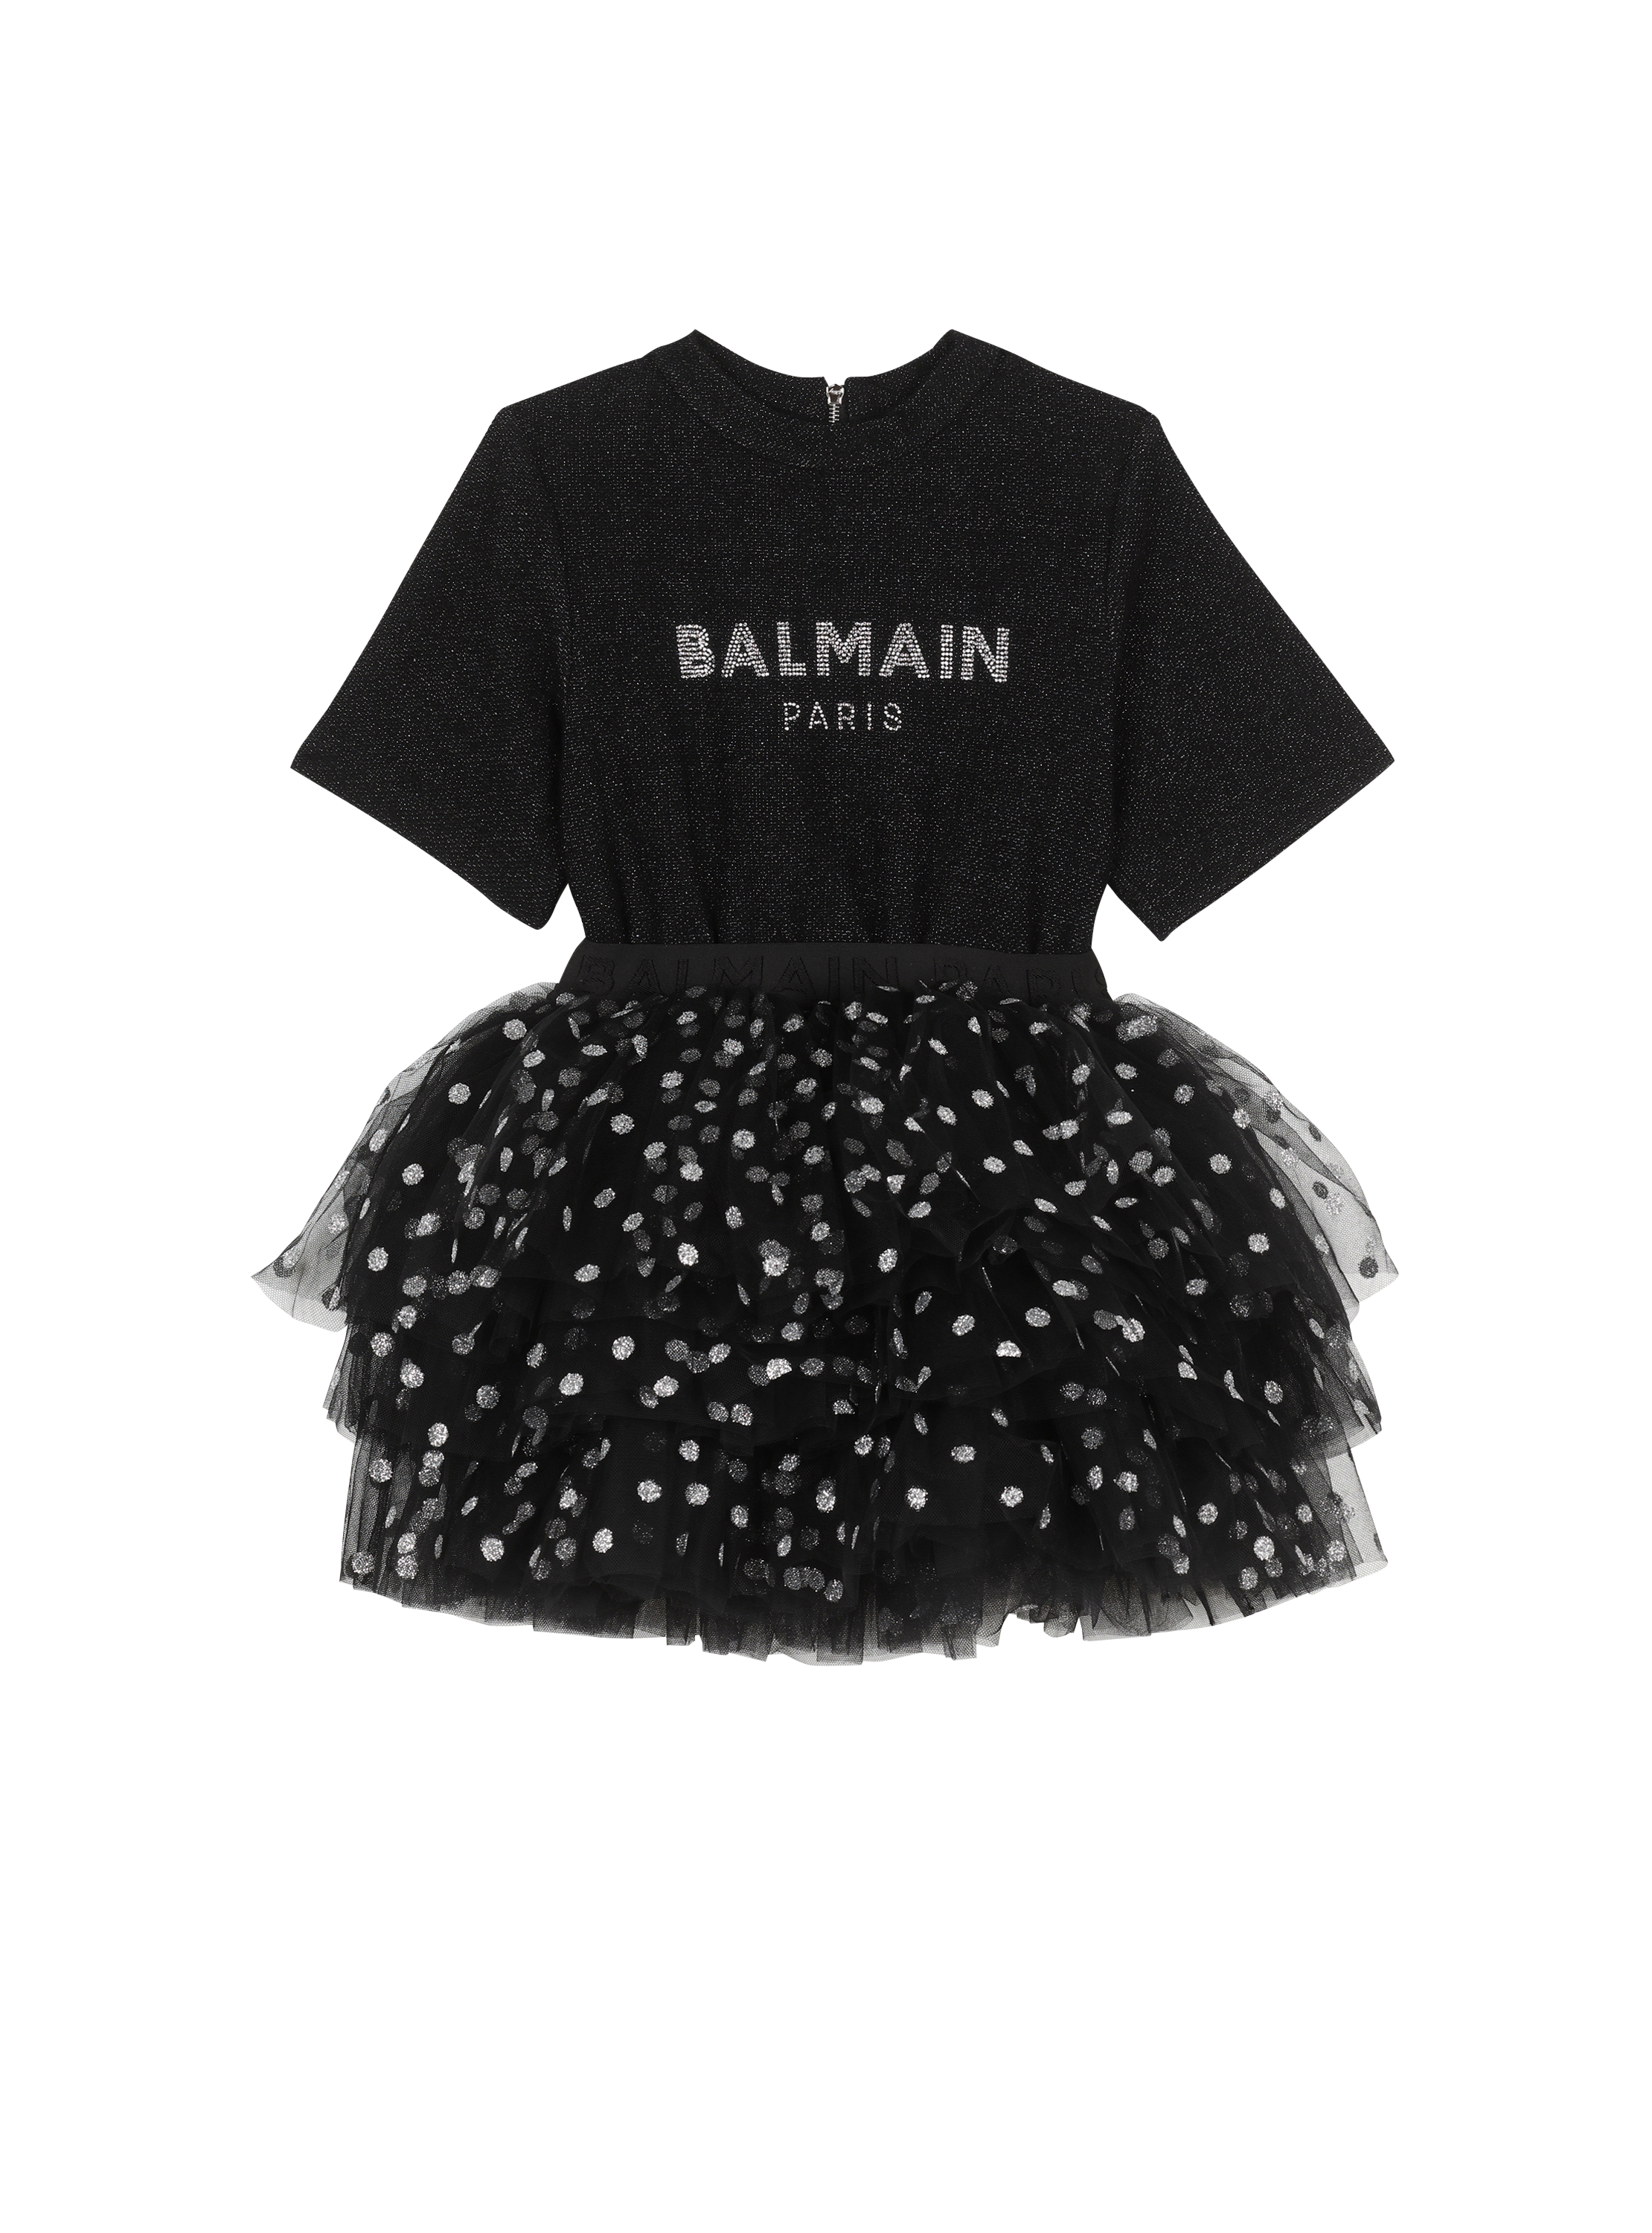 Balmain巴尔曼标志棉质连衣裙